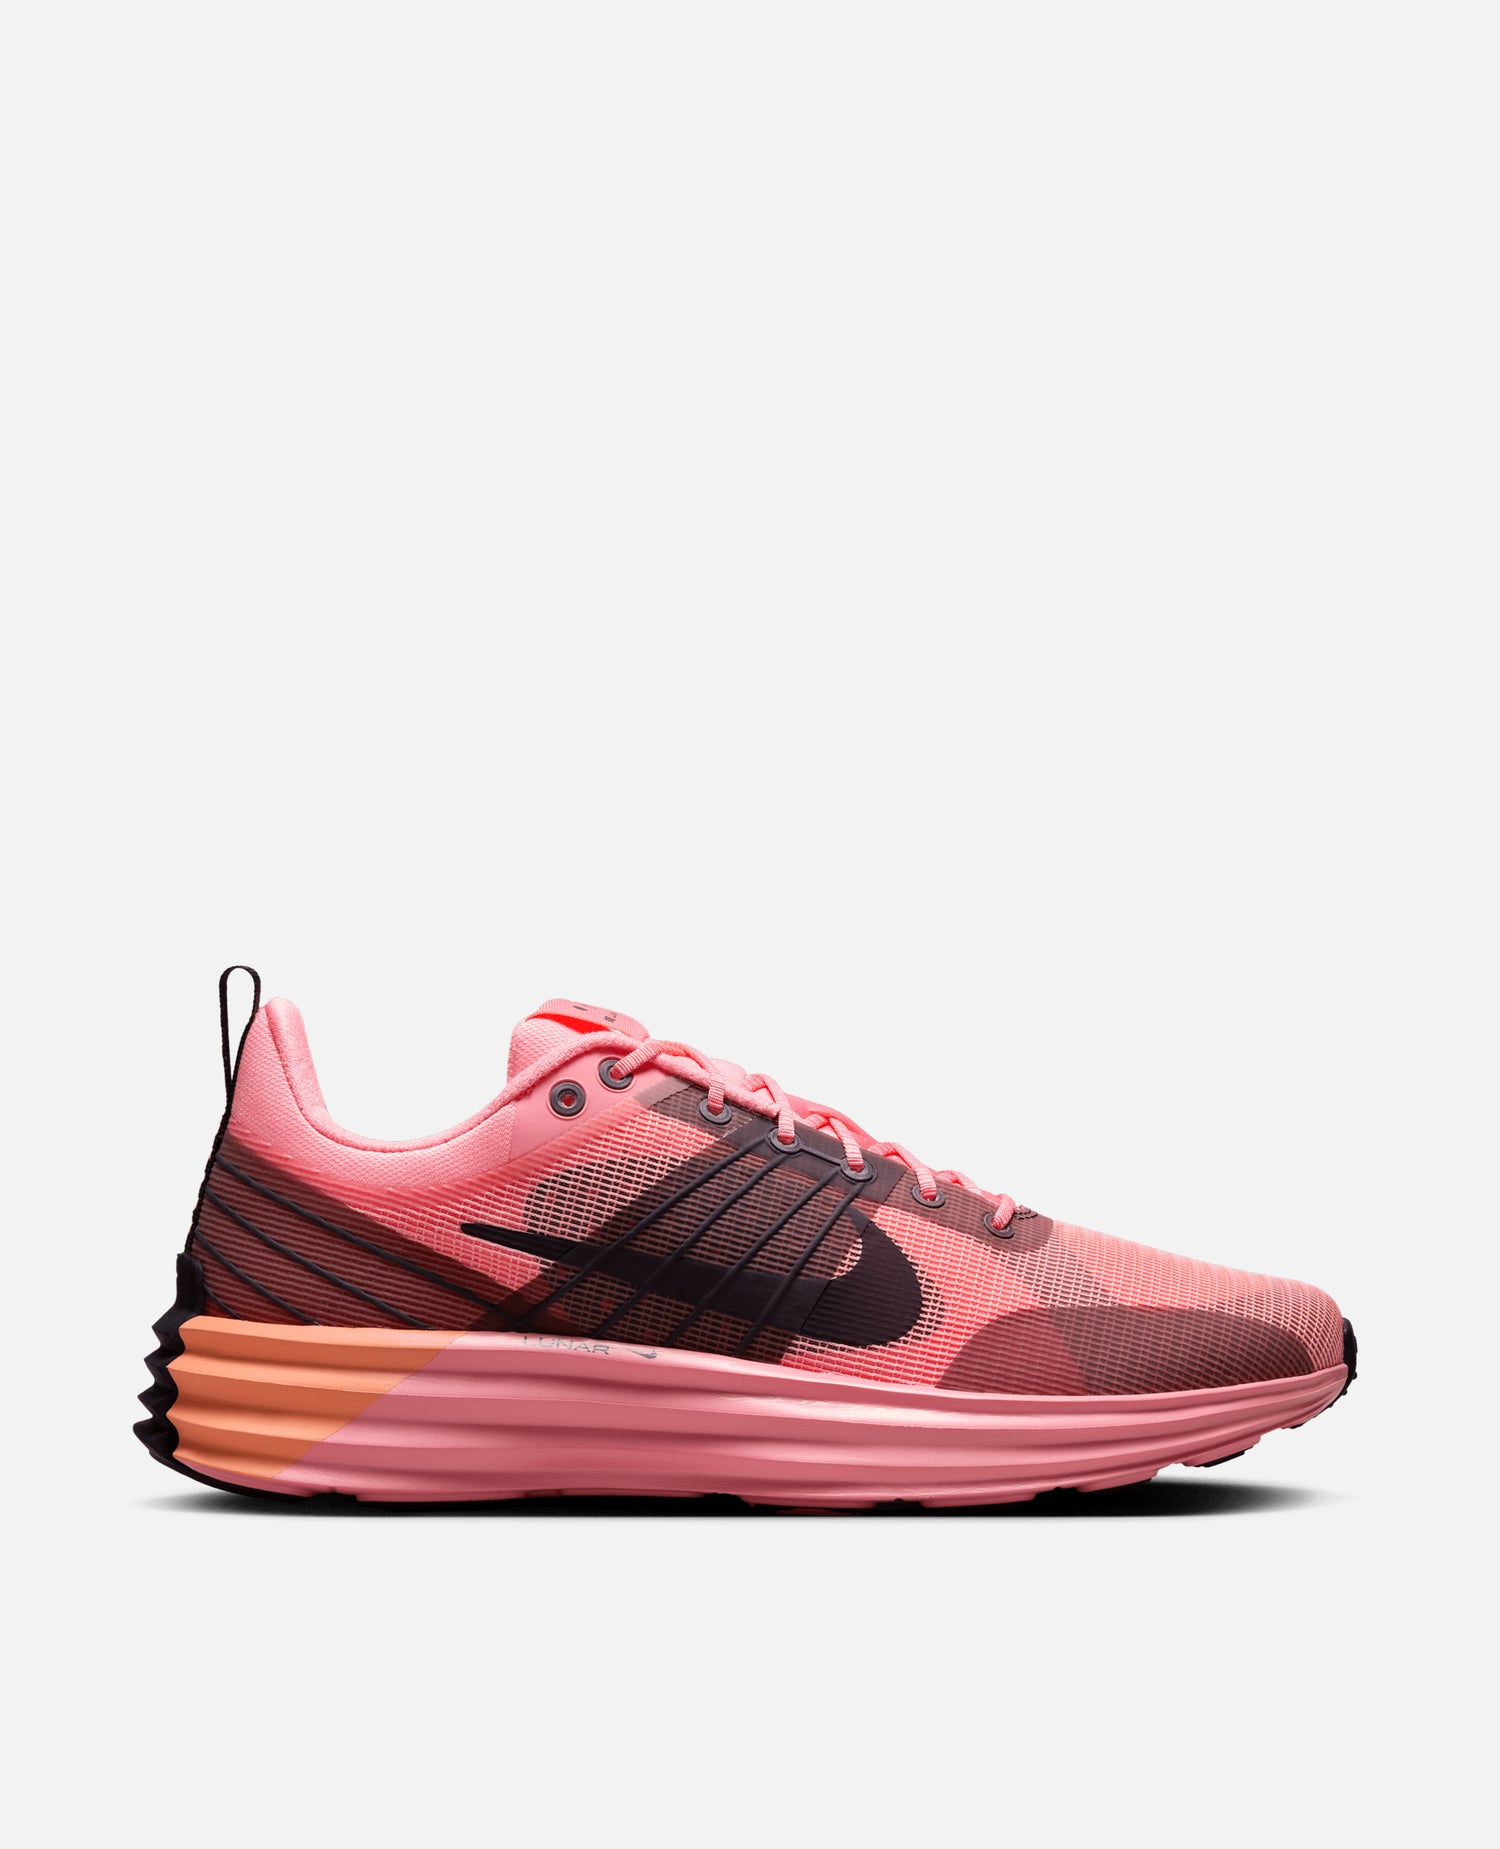 Nike Lunar Roam Premium (Pink Gaze/Black-Crimsom Bliss)